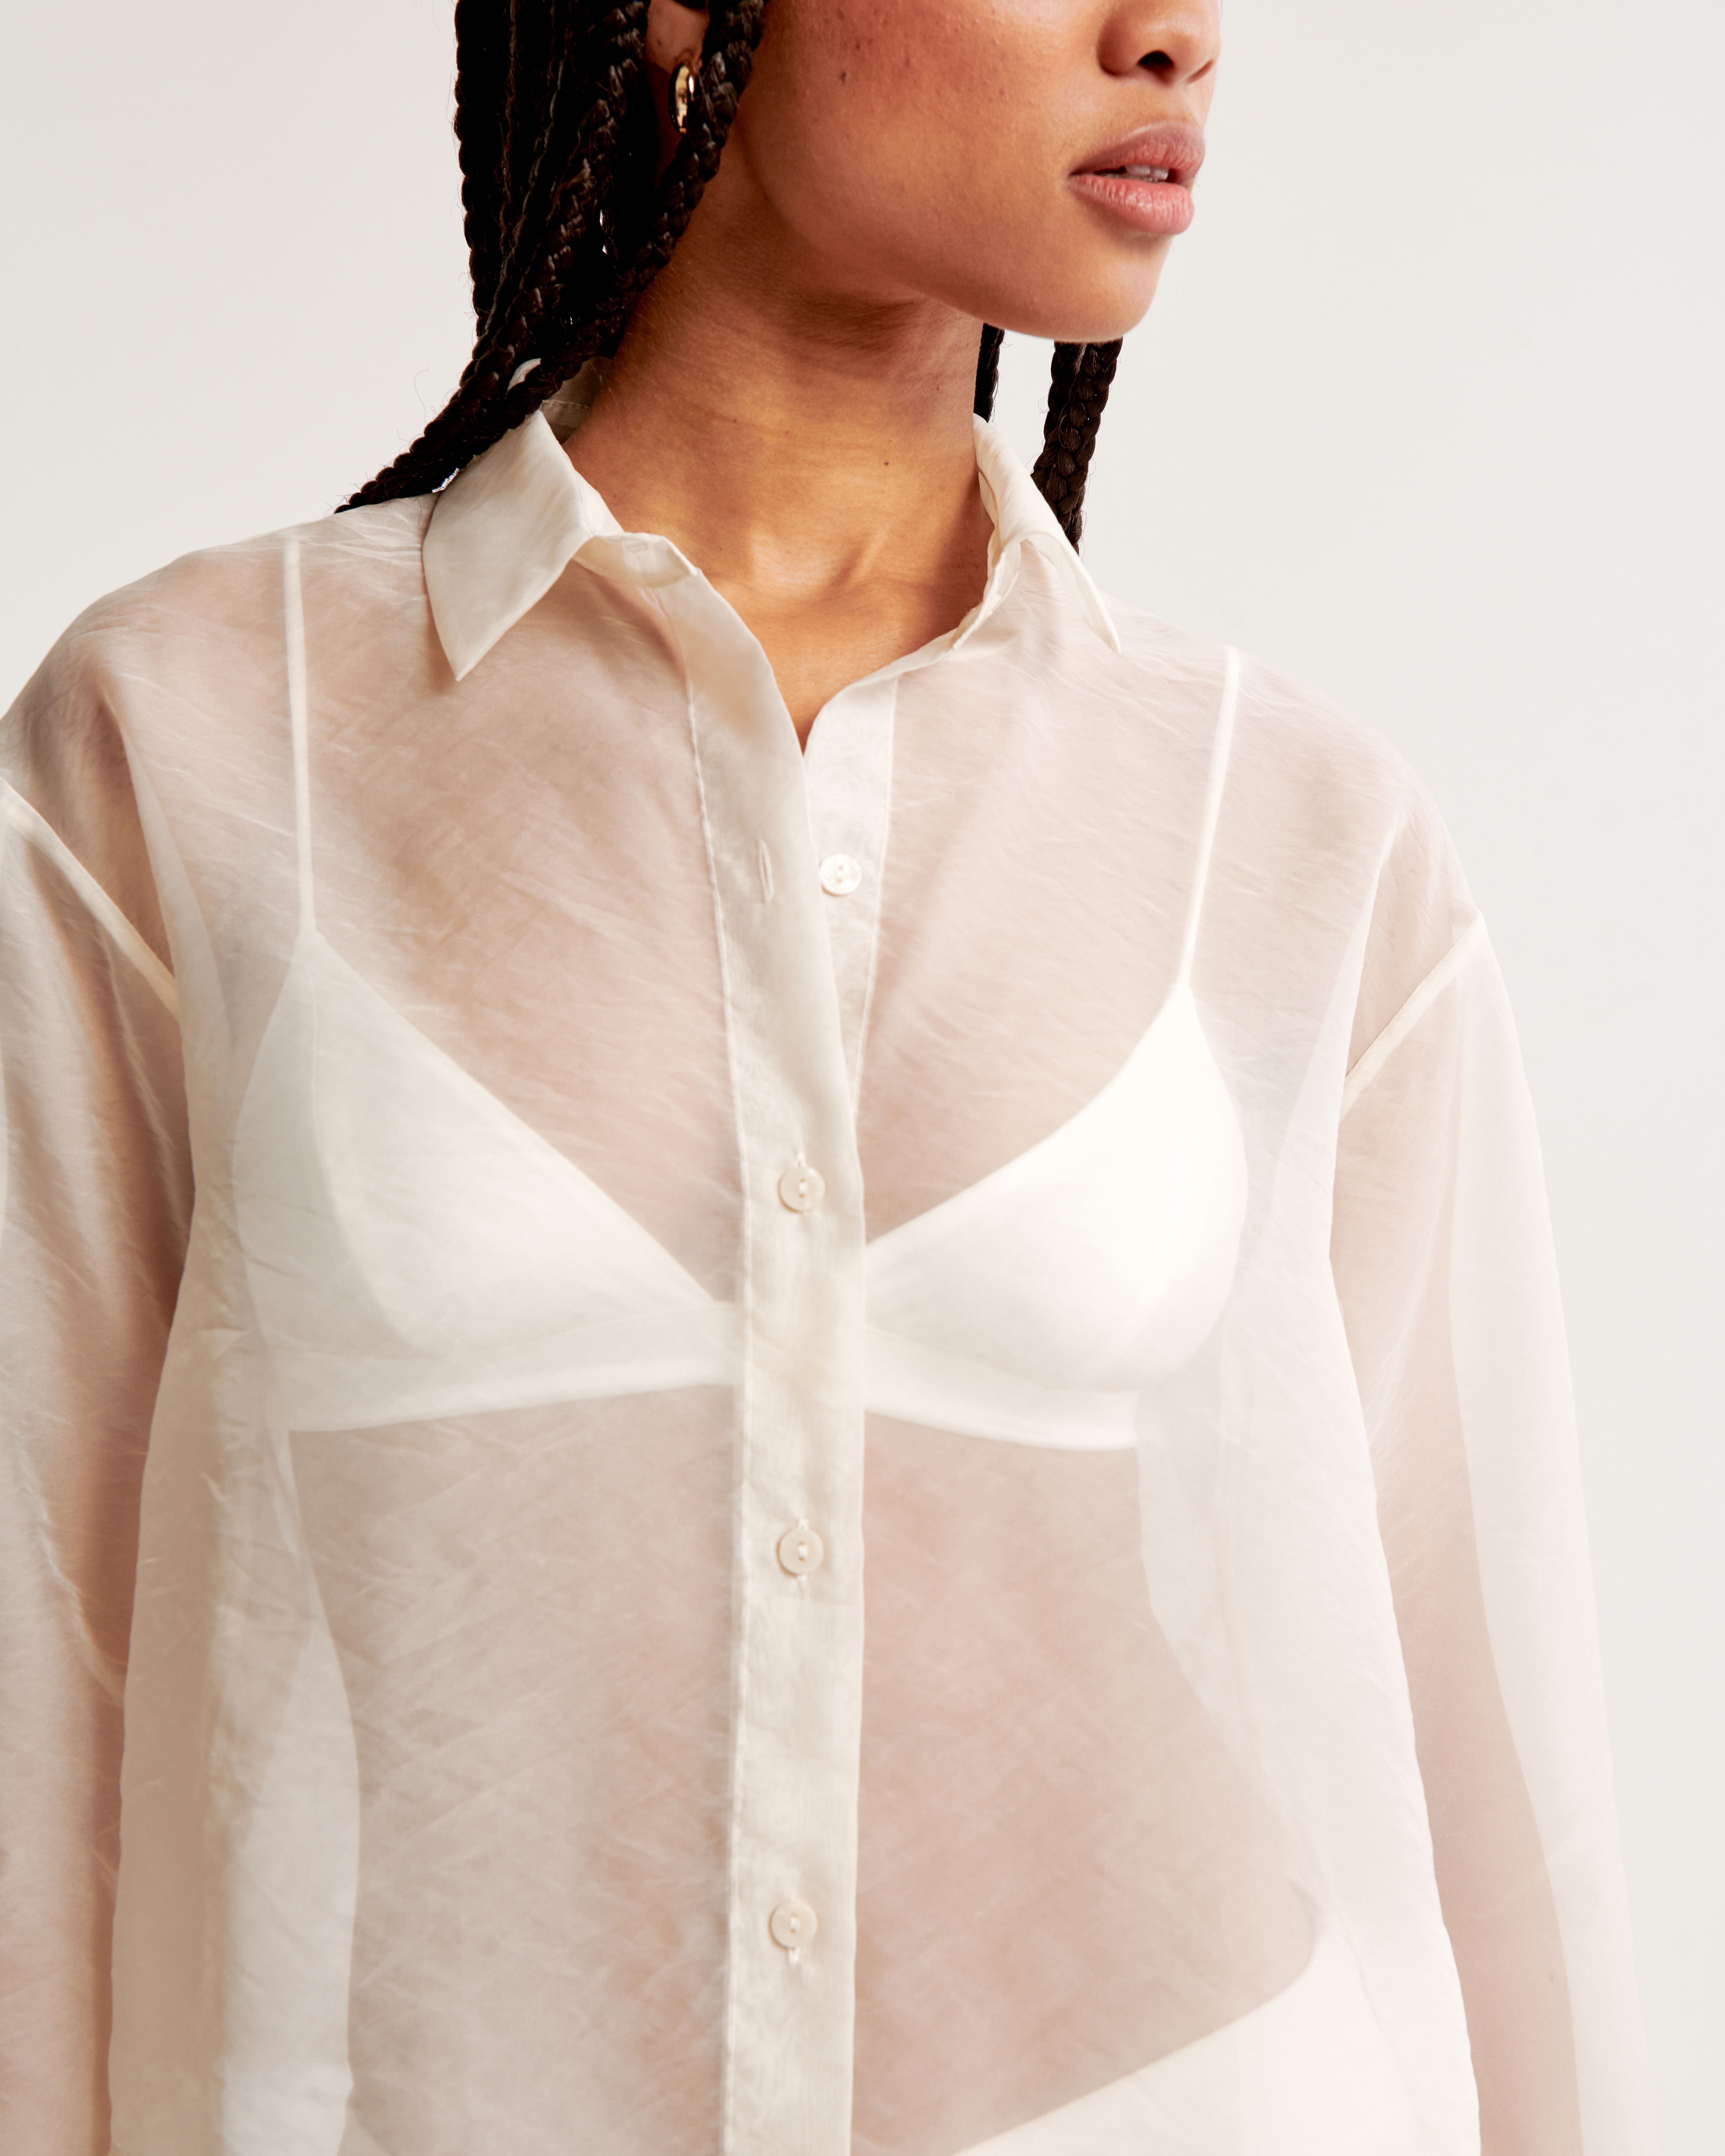 Women's Long-Sleeve Sheer Shirt | Women's Tops | Abercrombie.com